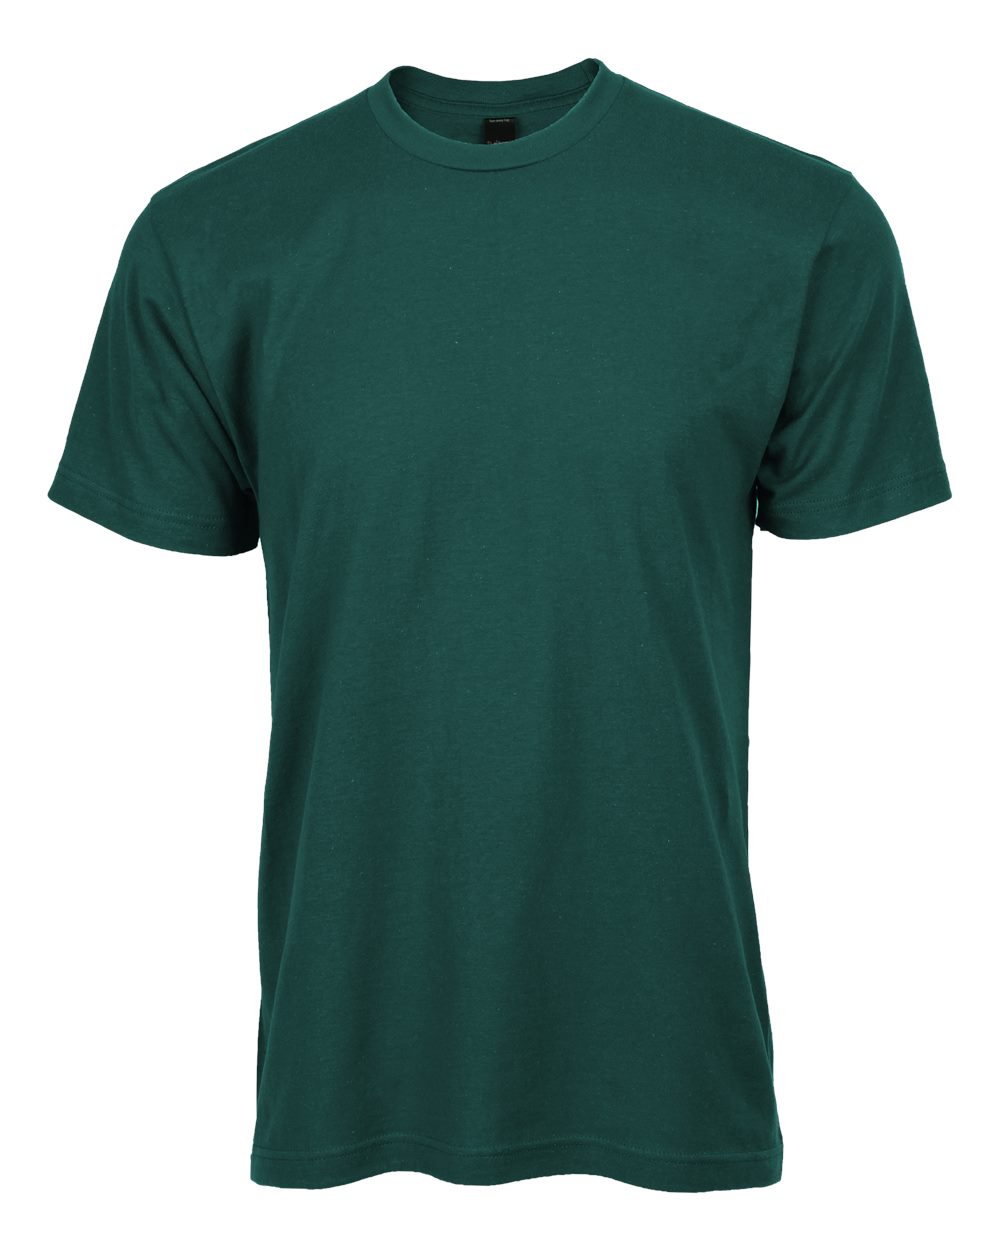 Tultex T202 Fine Jersey T-Shirt–Teal (3XL)